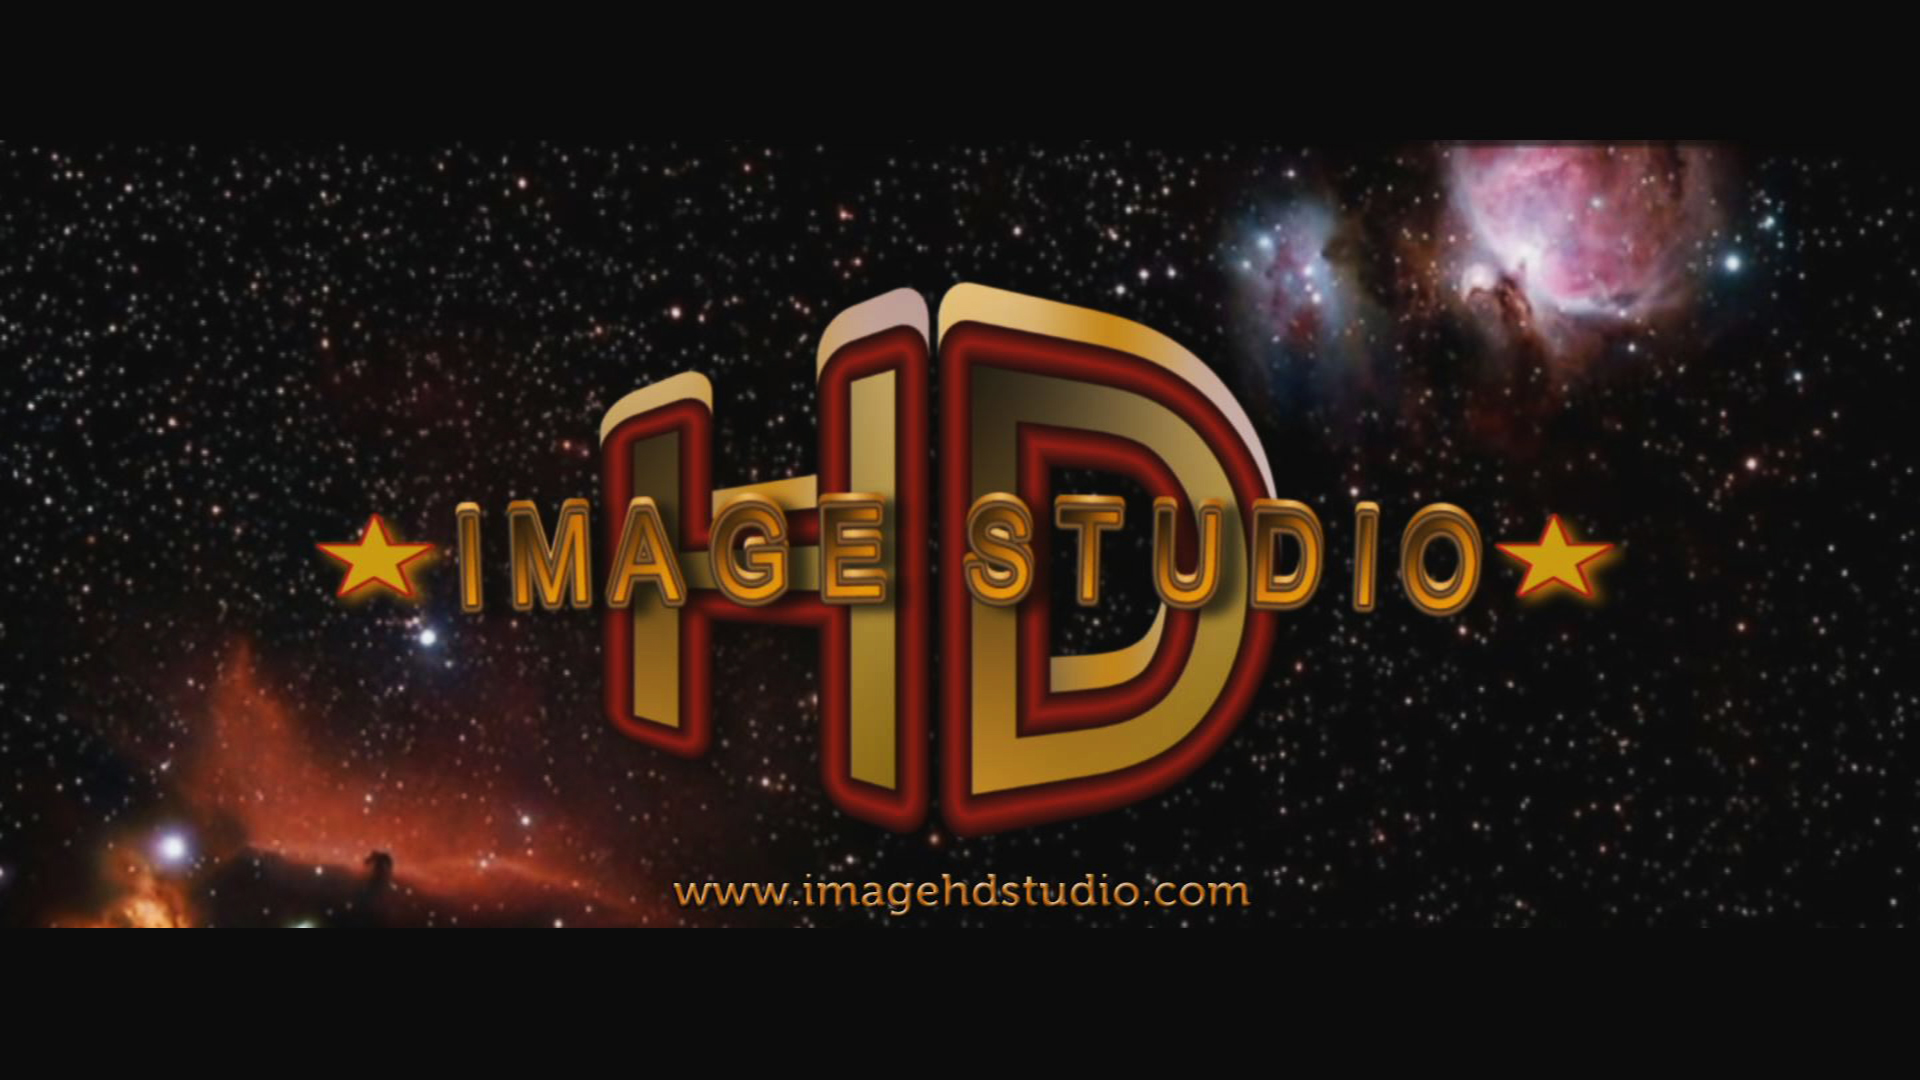 Image HD Studio logo